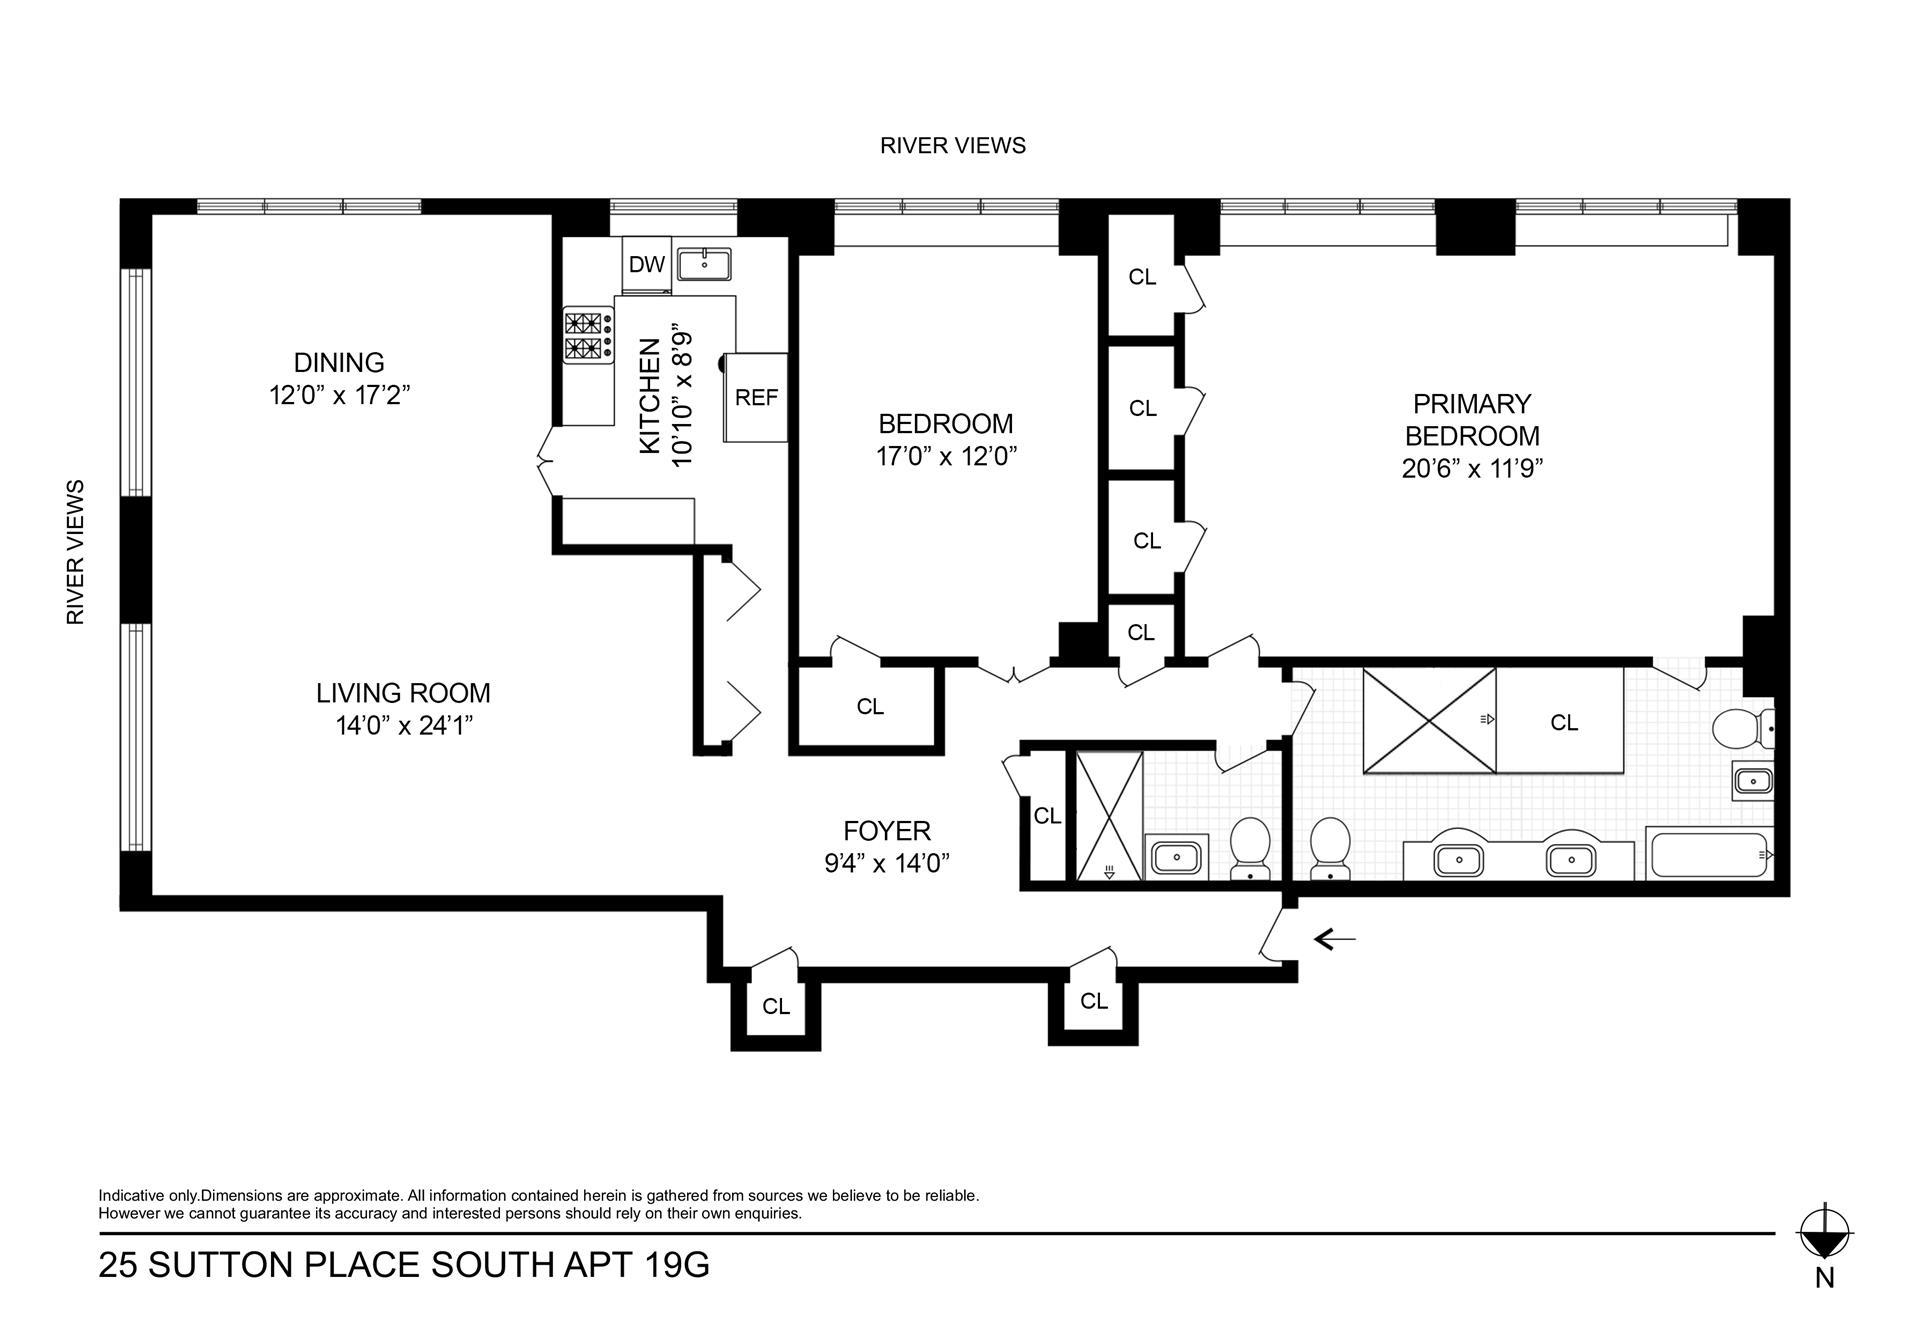 Floorplan for 25 Sutton Place, 19G